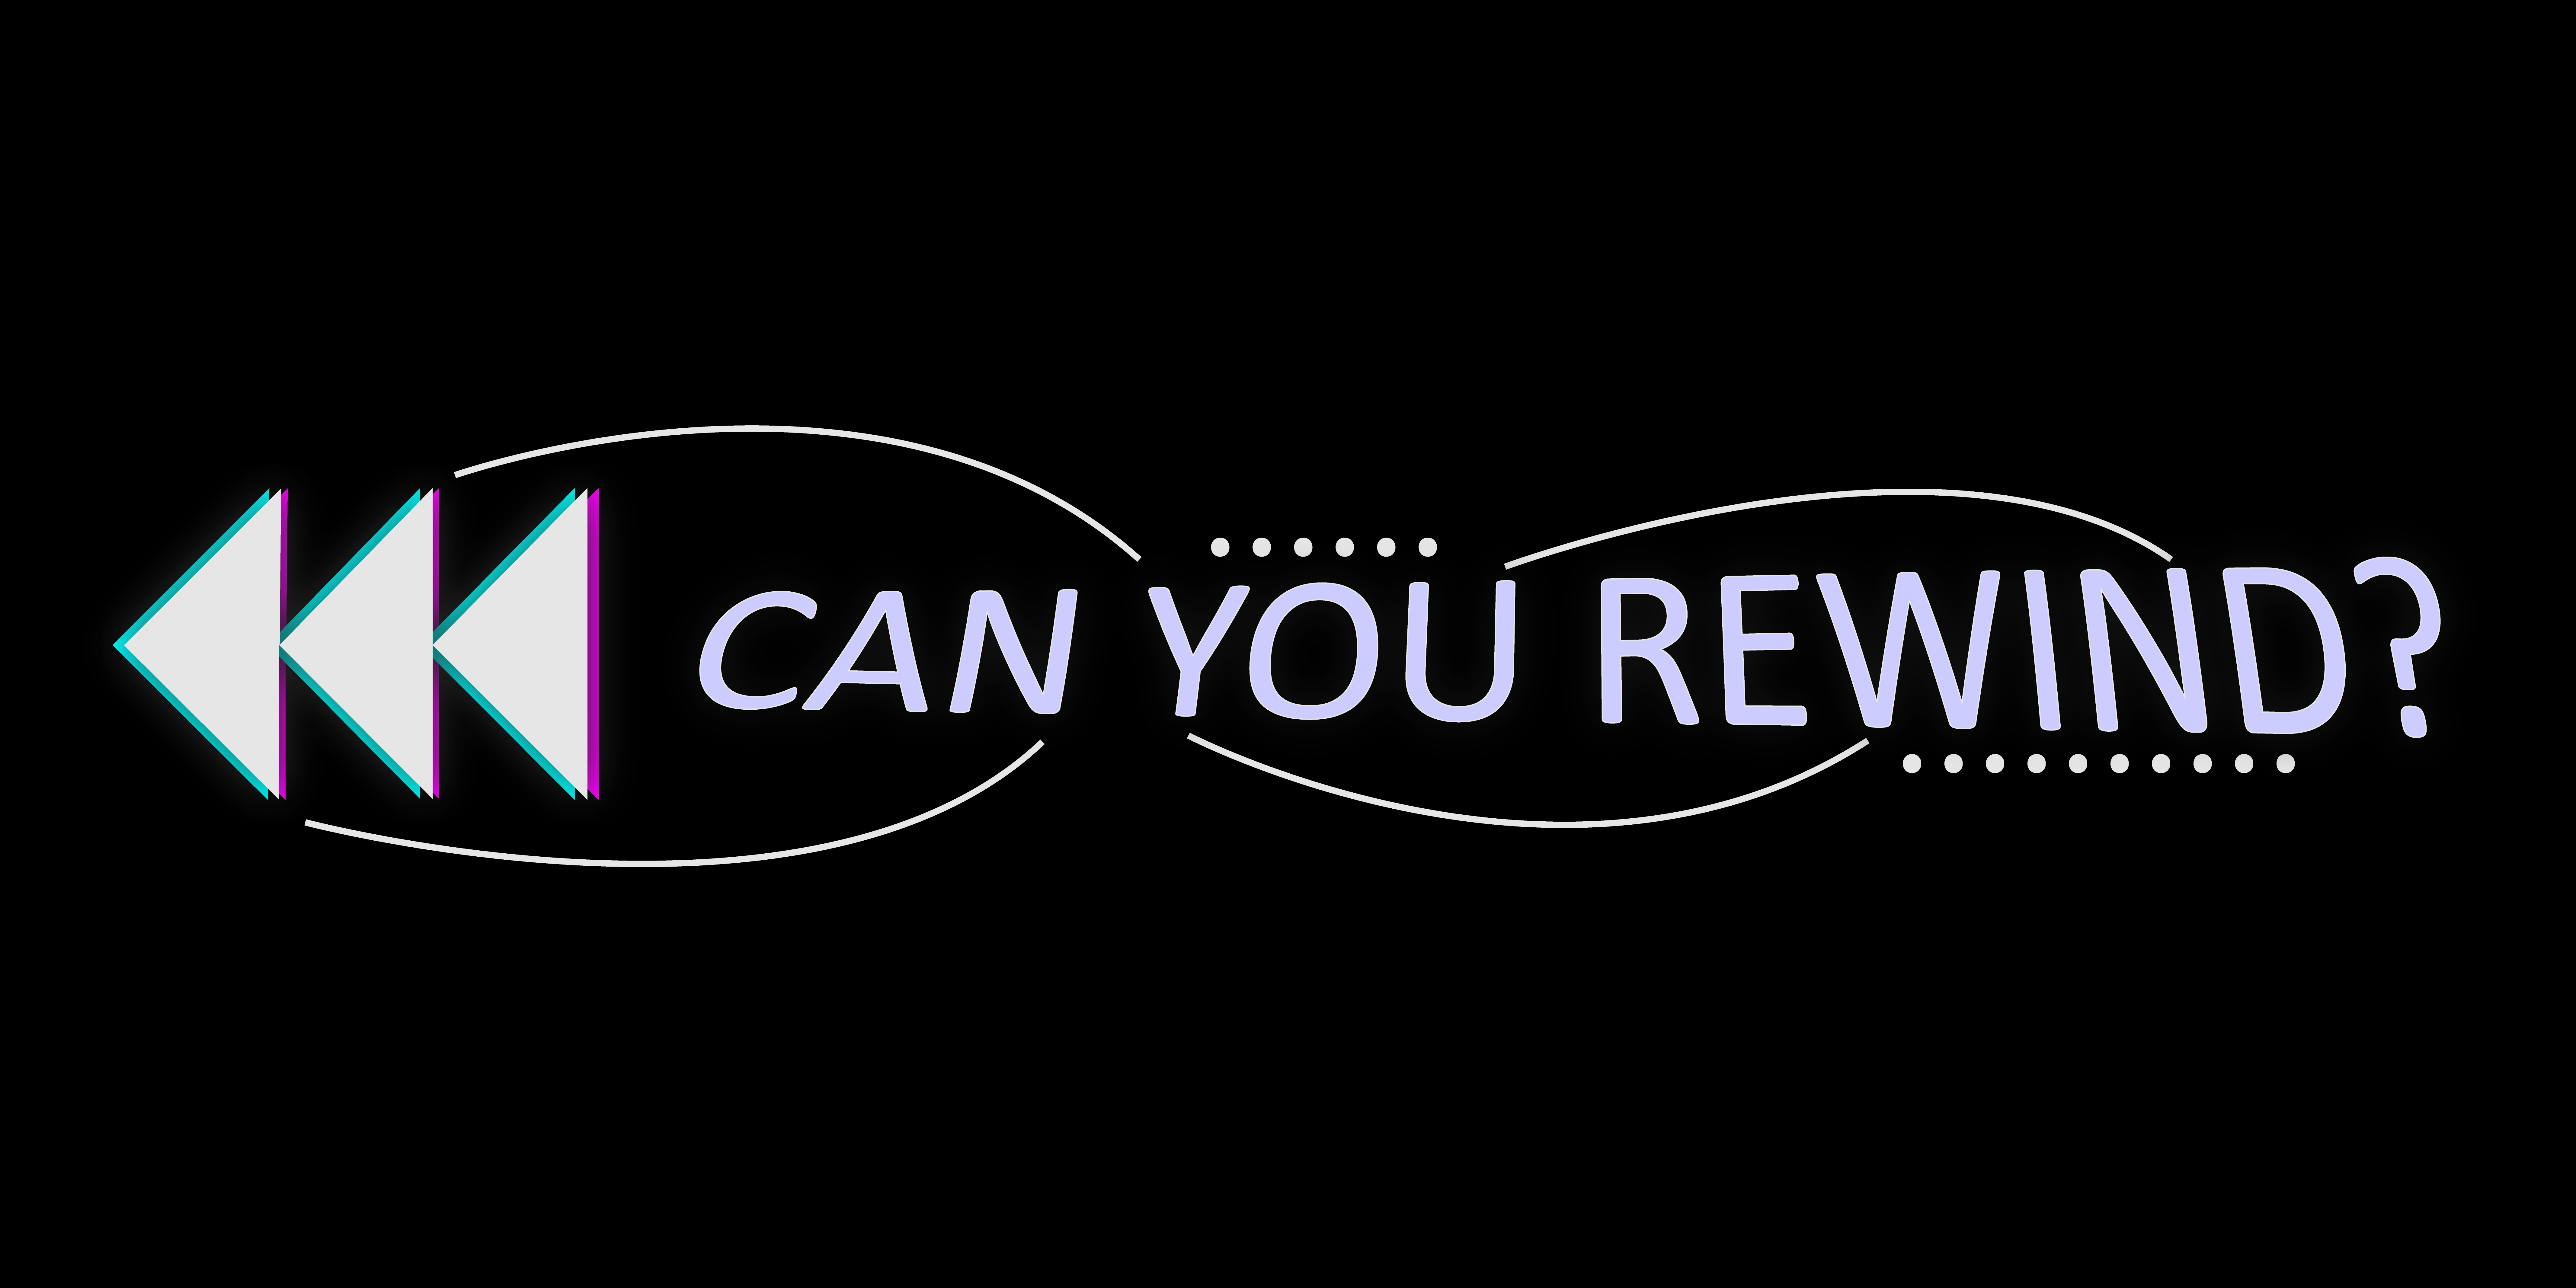 Can You Rewind?